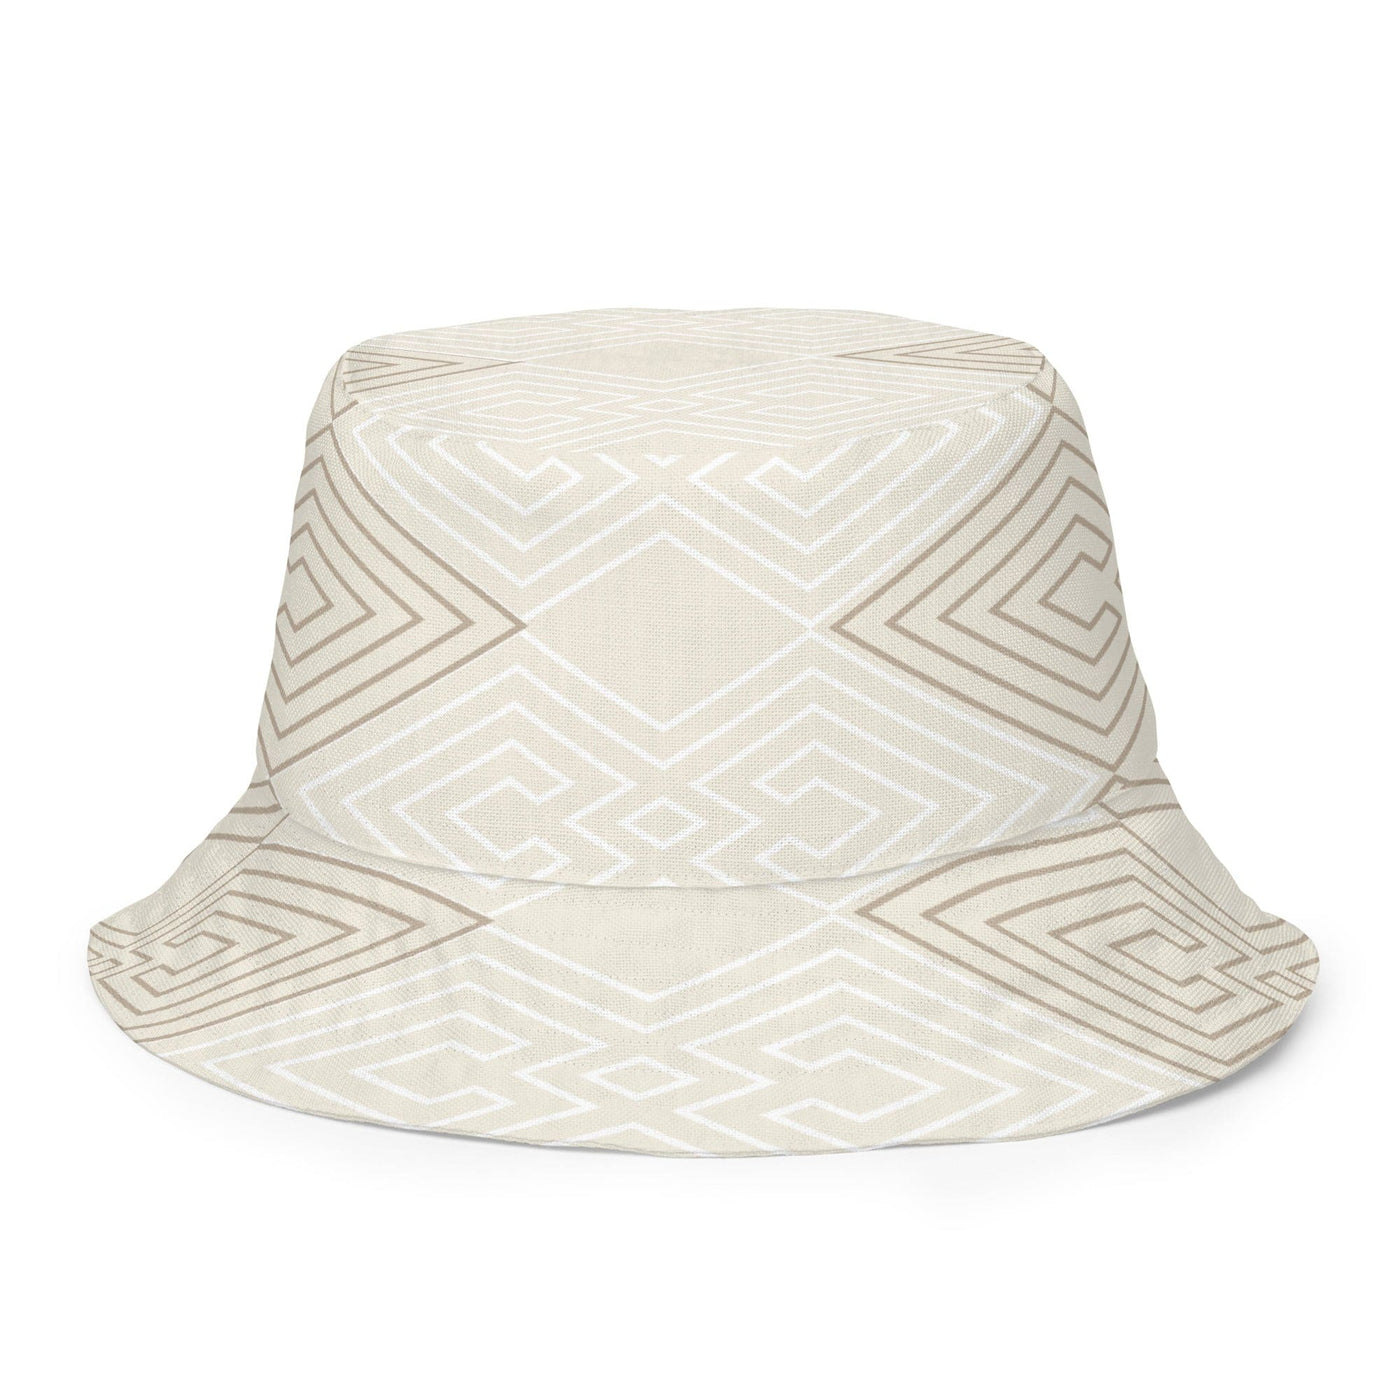 Reversible Bucket Hat Beige And White Tribal Geometric Aztec Print - Unisex